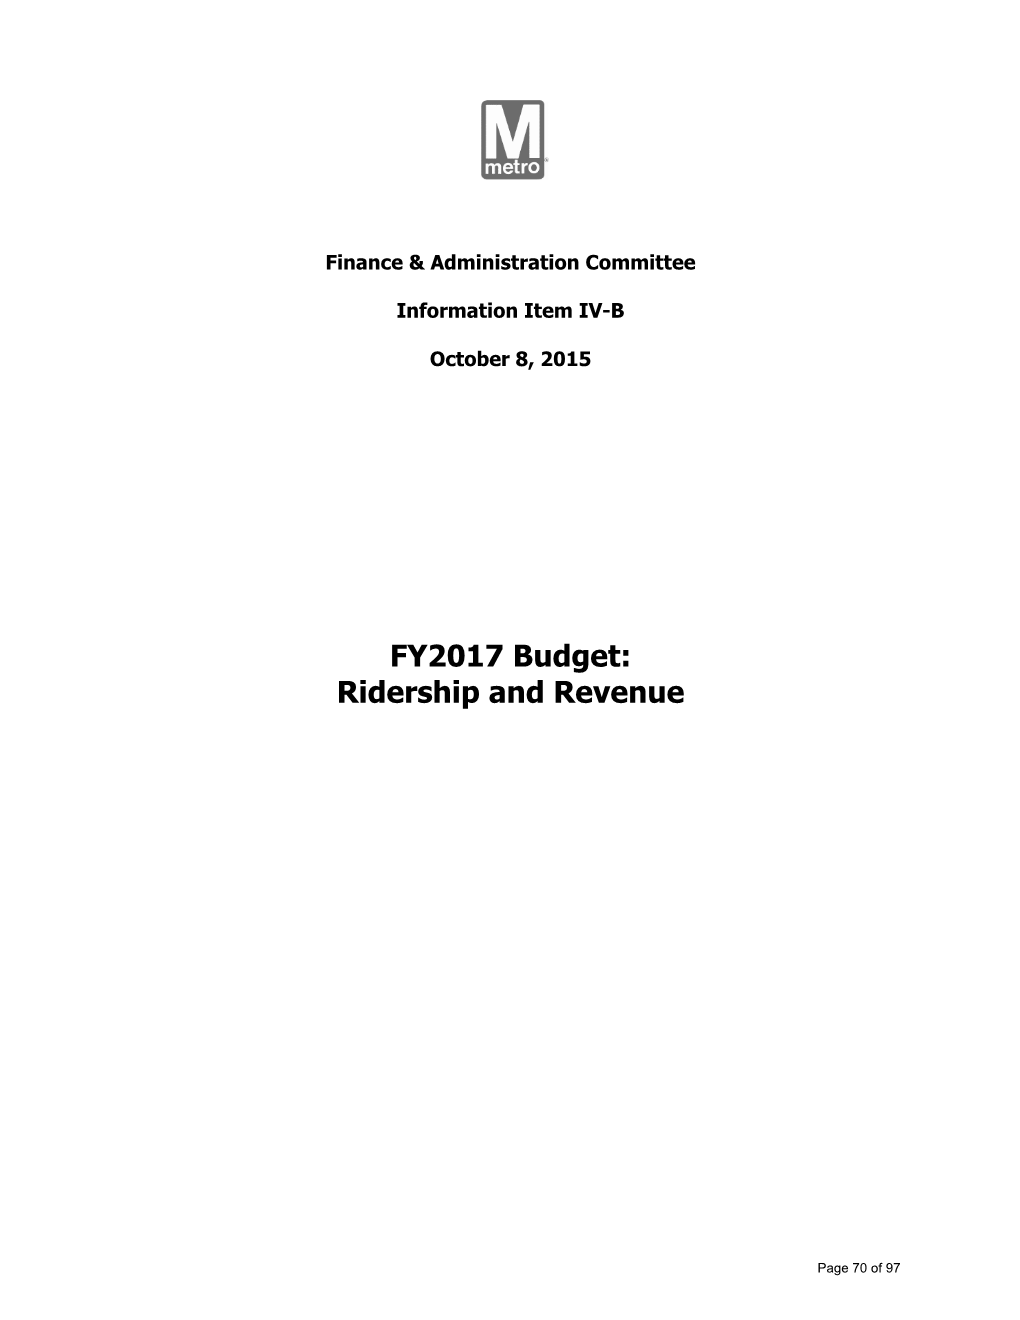 FY2017 Budget: Ridership and Revenue